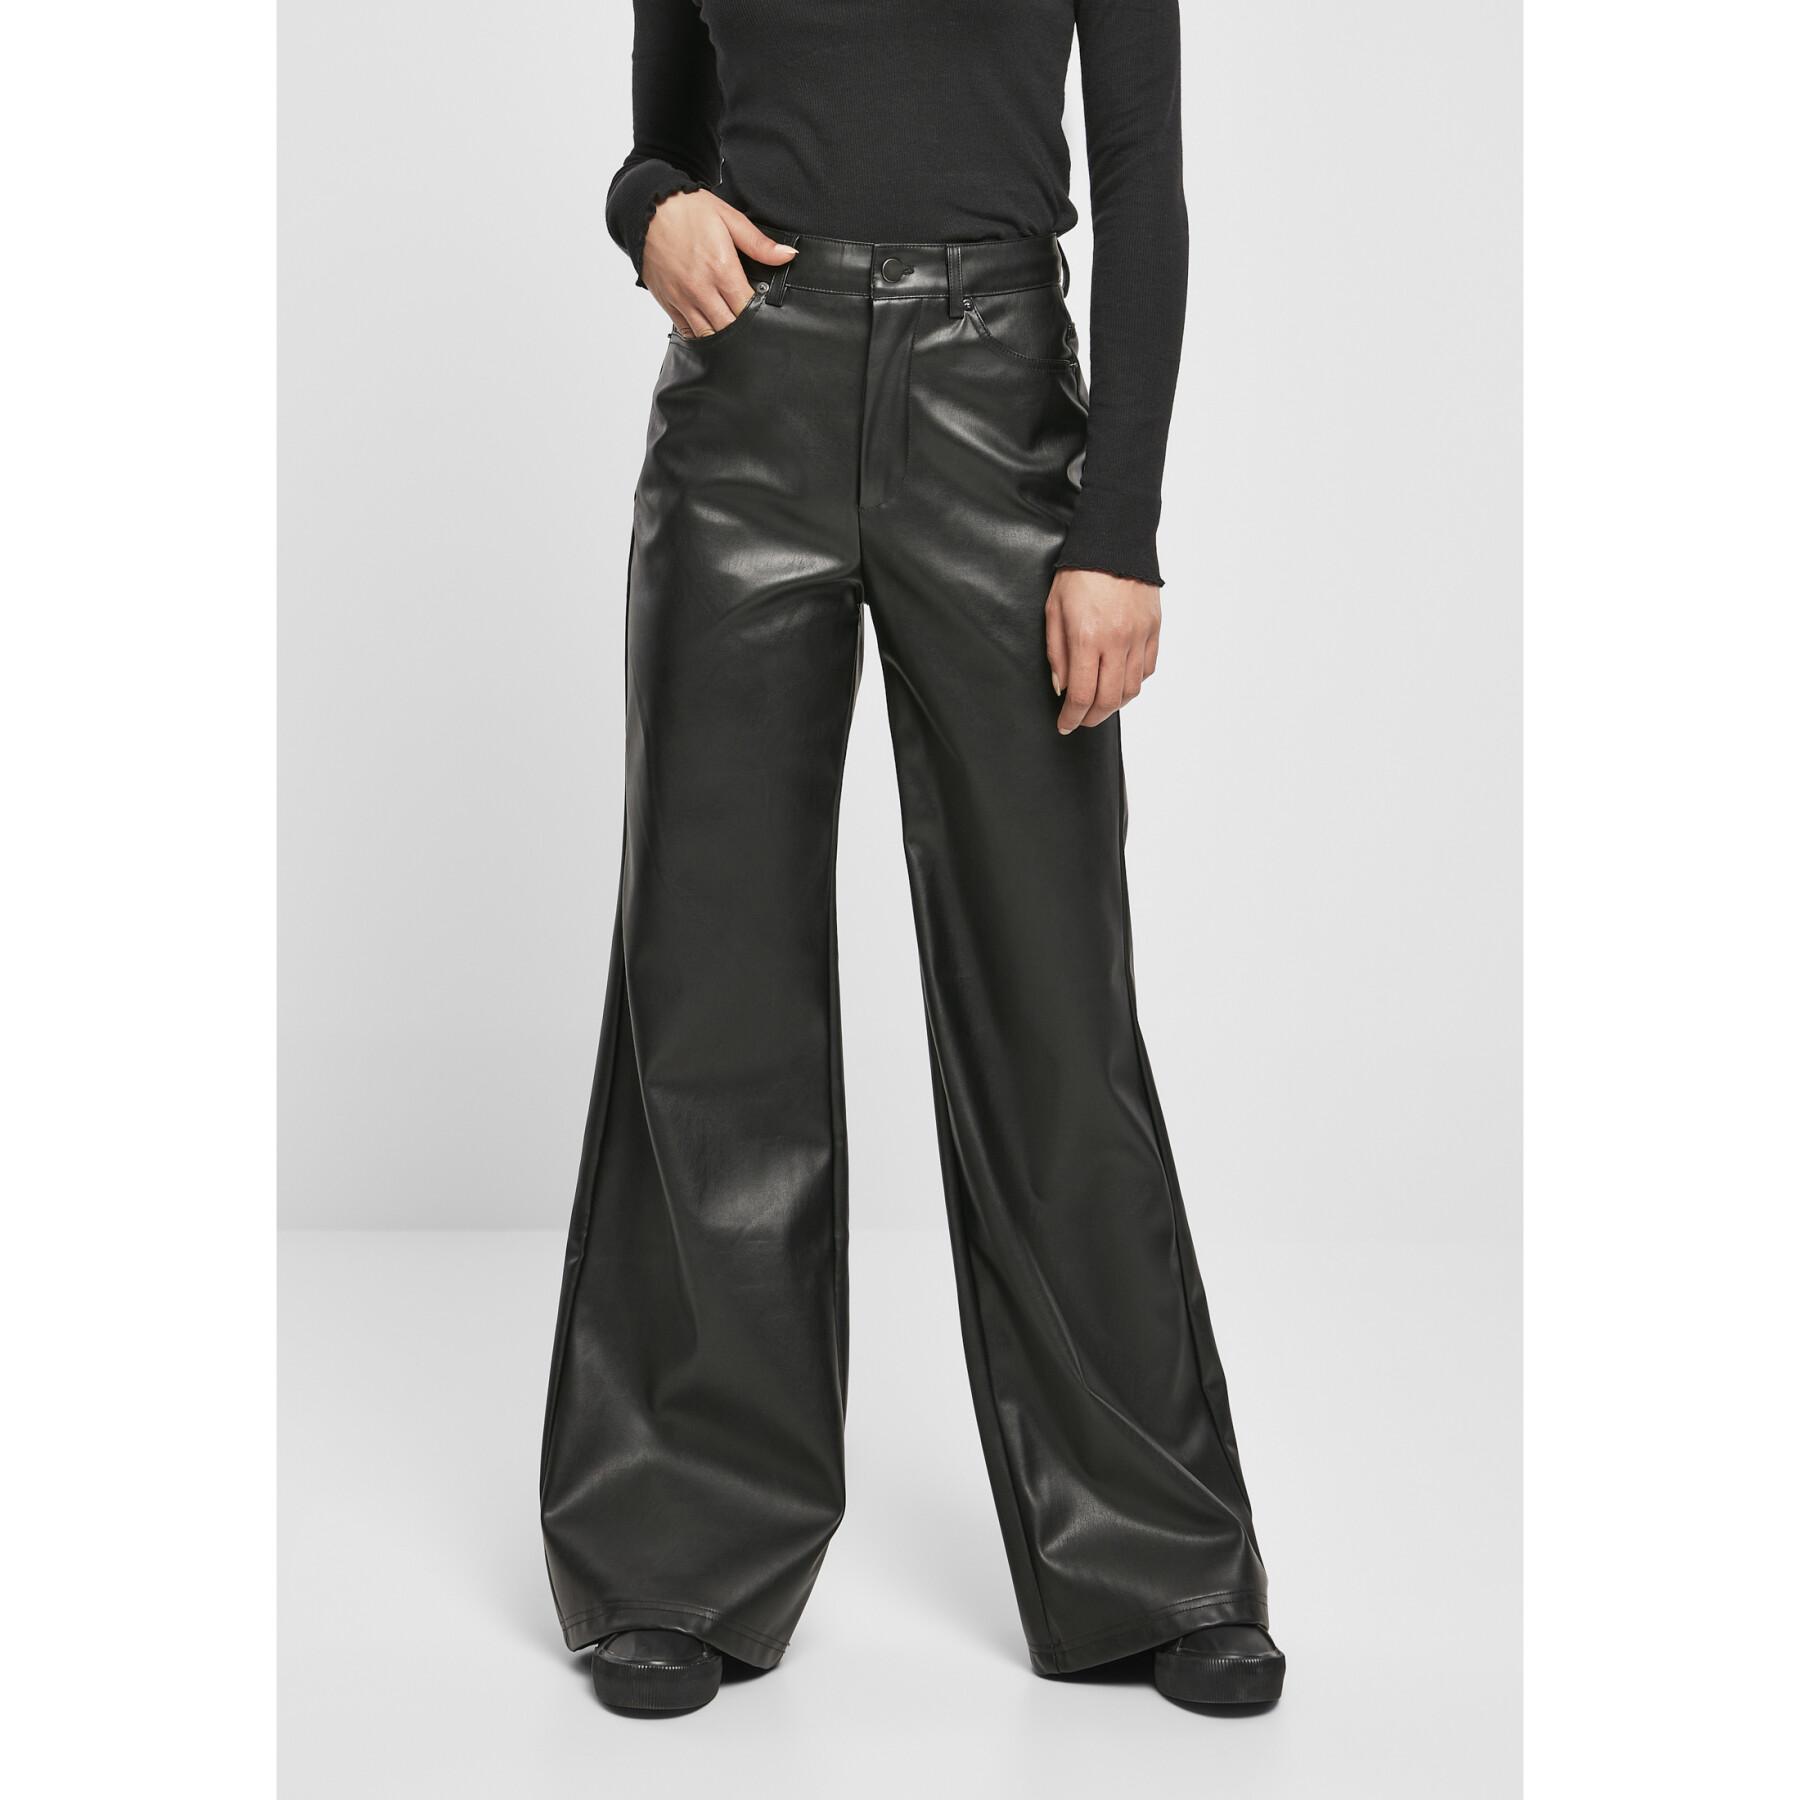 Women's trousers Urban Classics faux leather wide leg (GT)